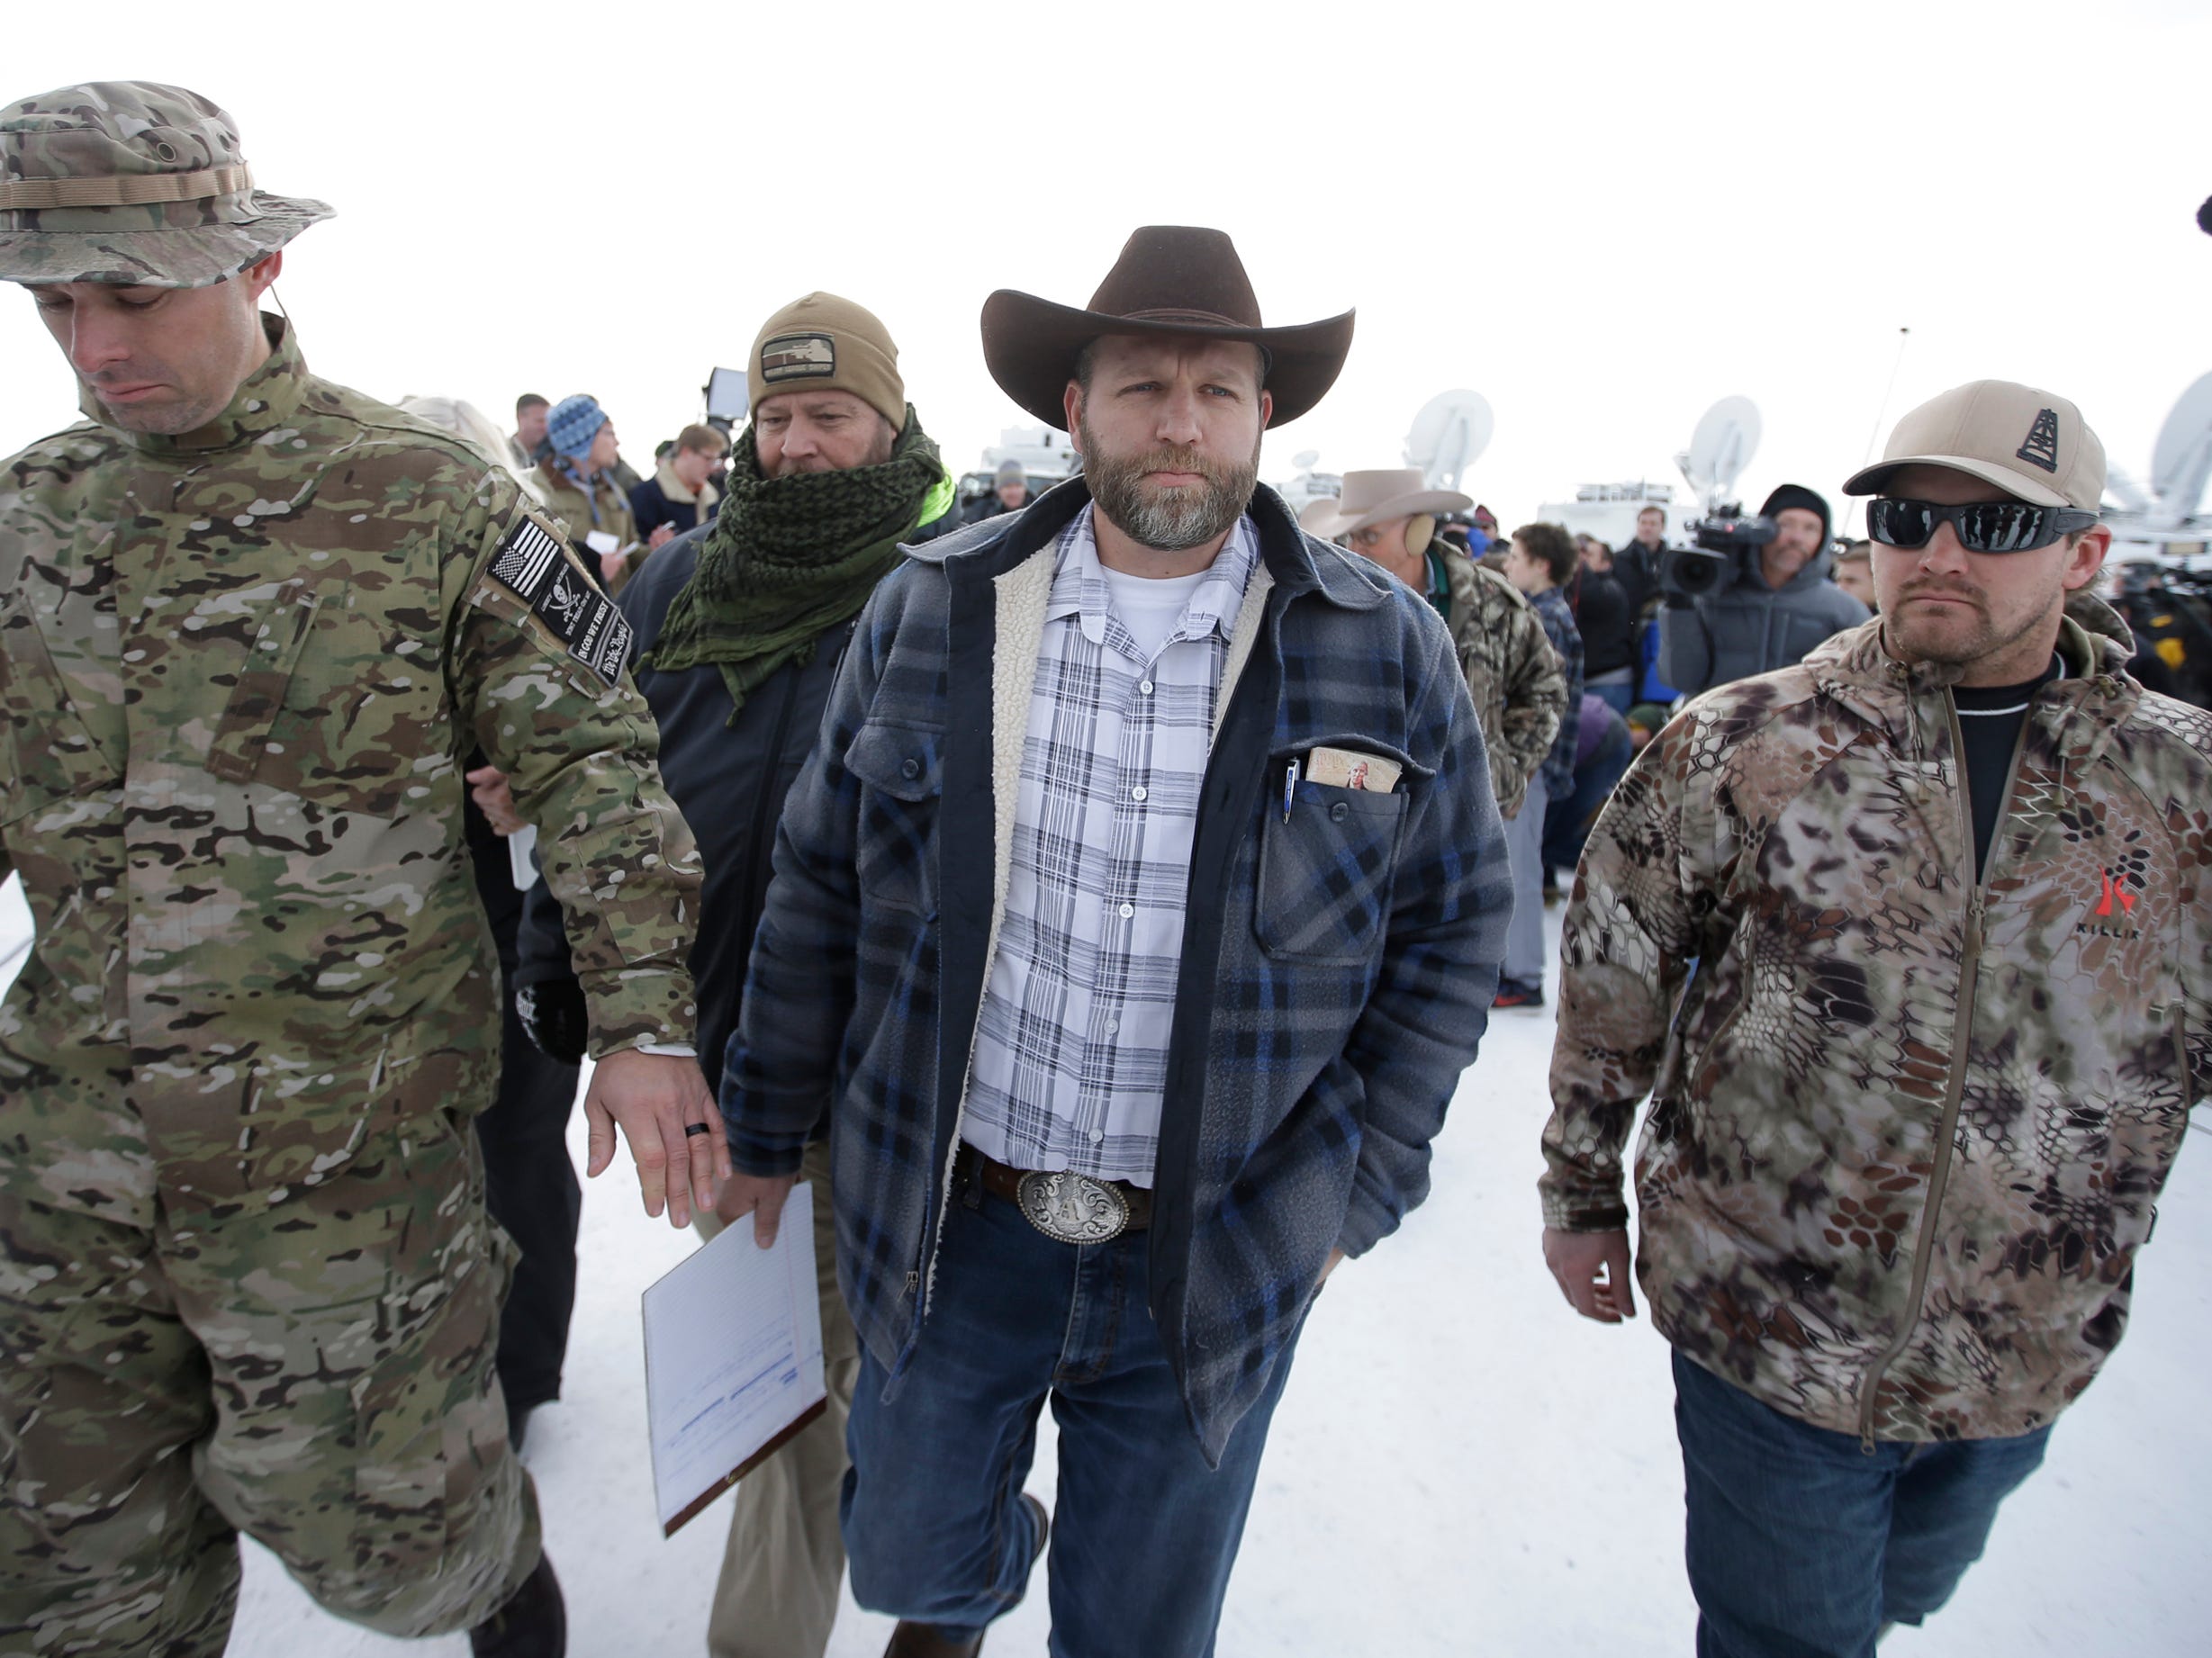 Ammon Bundy, wearing a cowboy hat, walks between two law enforcement agents.